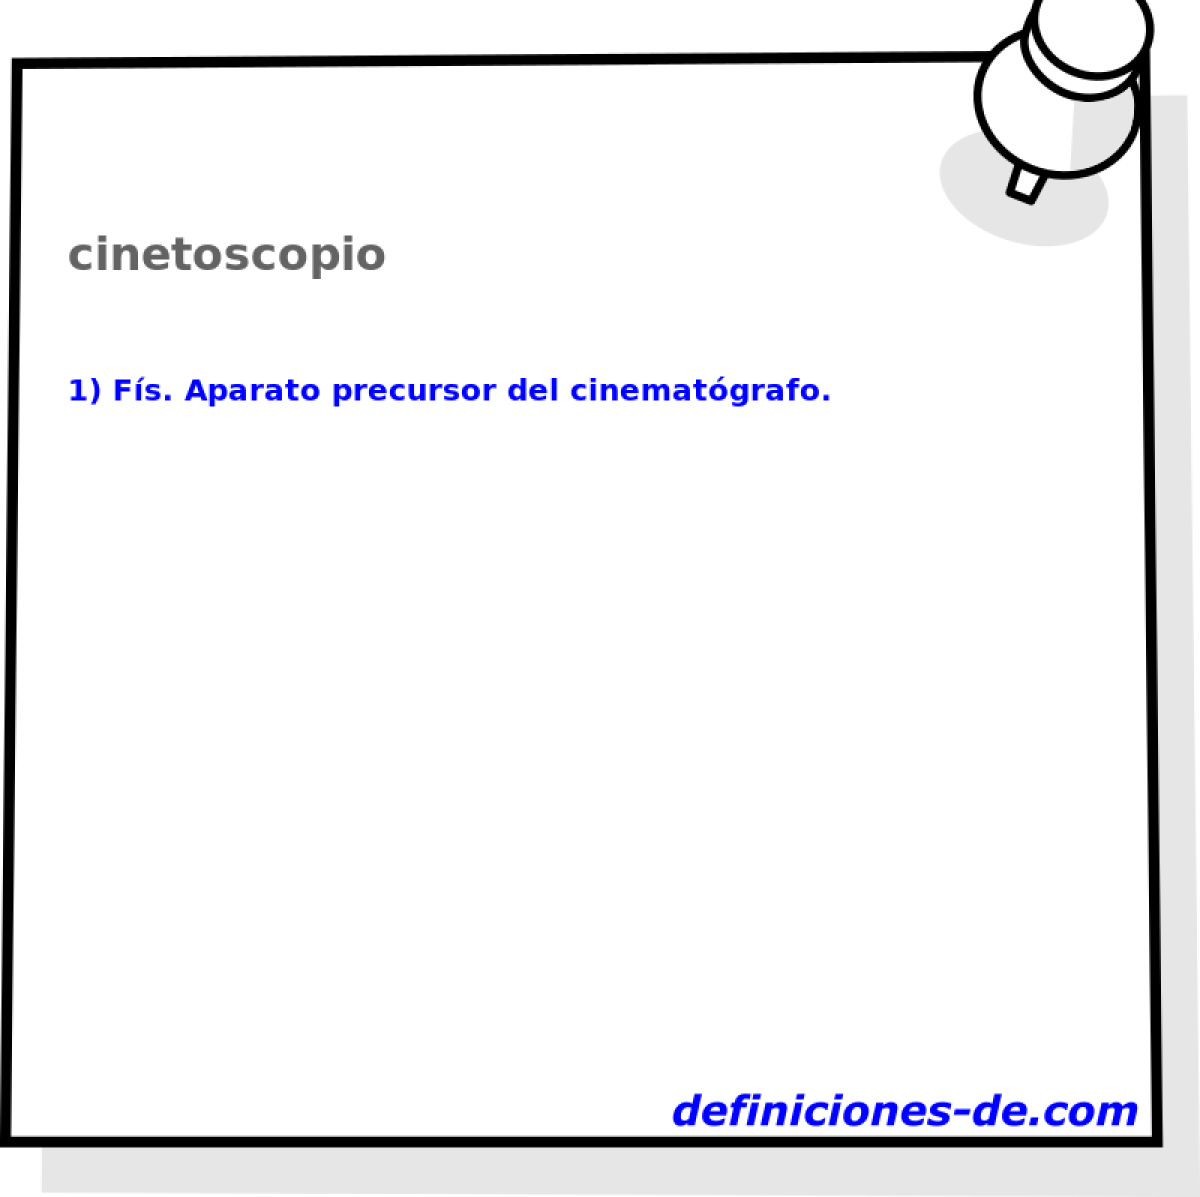 cinetoscopio 